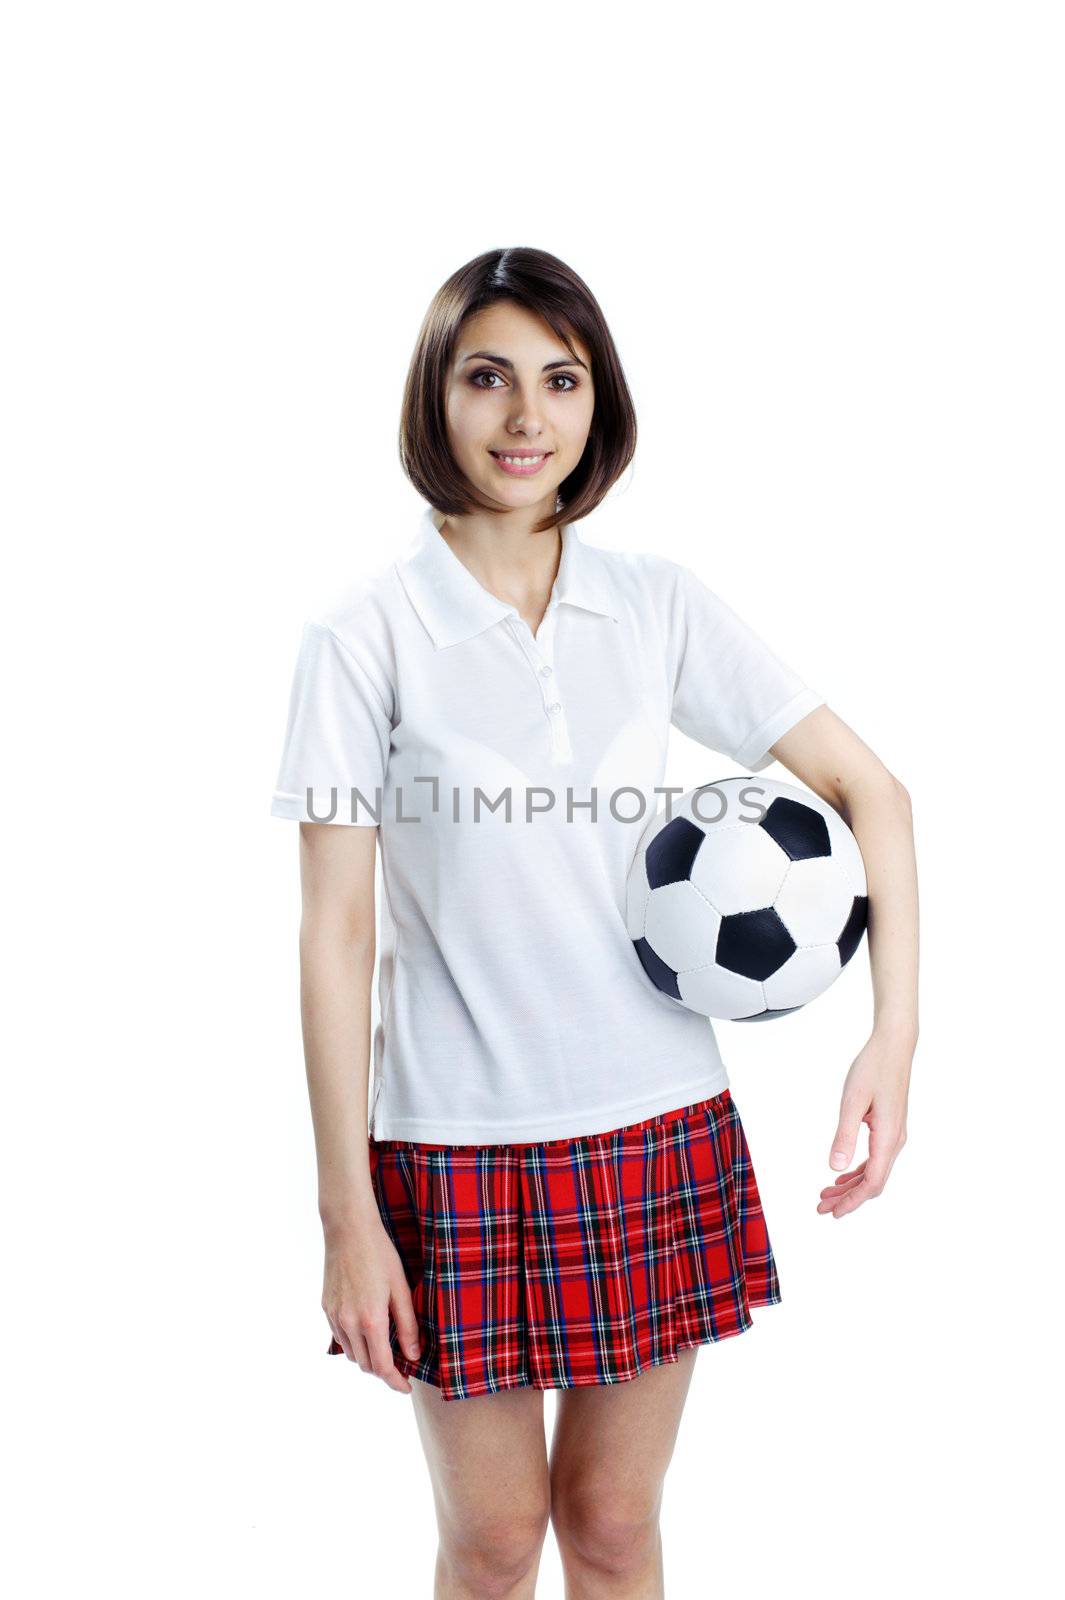 An image of of nice girl with soccer ball